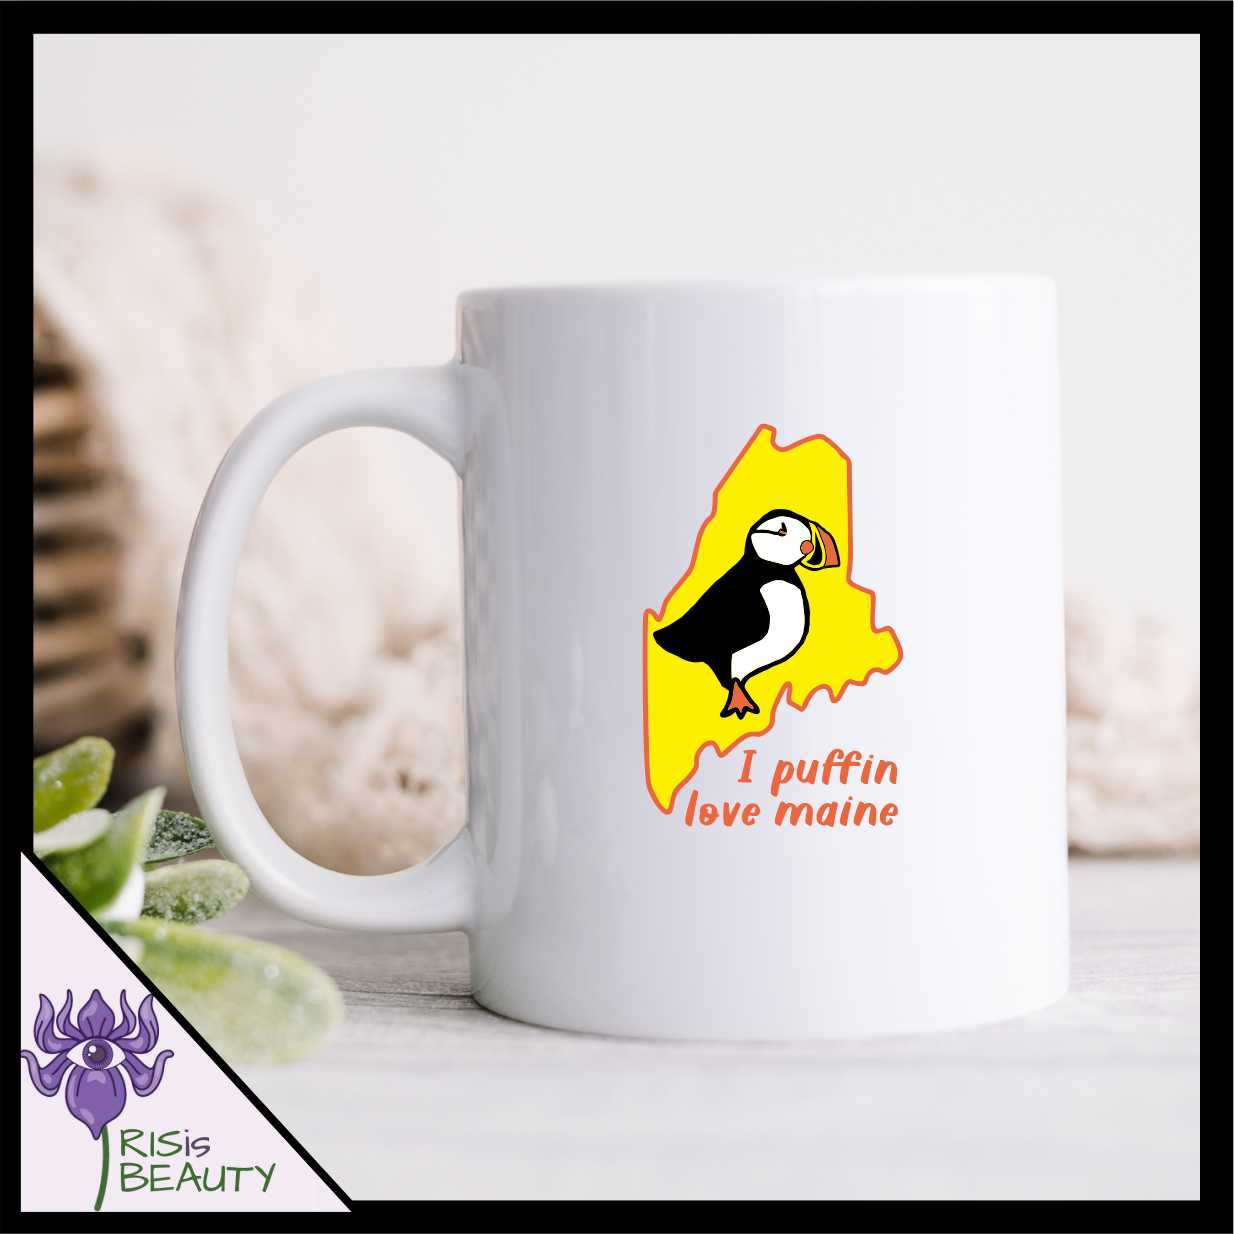 I Puffin Love Maine mug, coffee mug, tea mug, Puffin art designed by IRISisBEAUTY